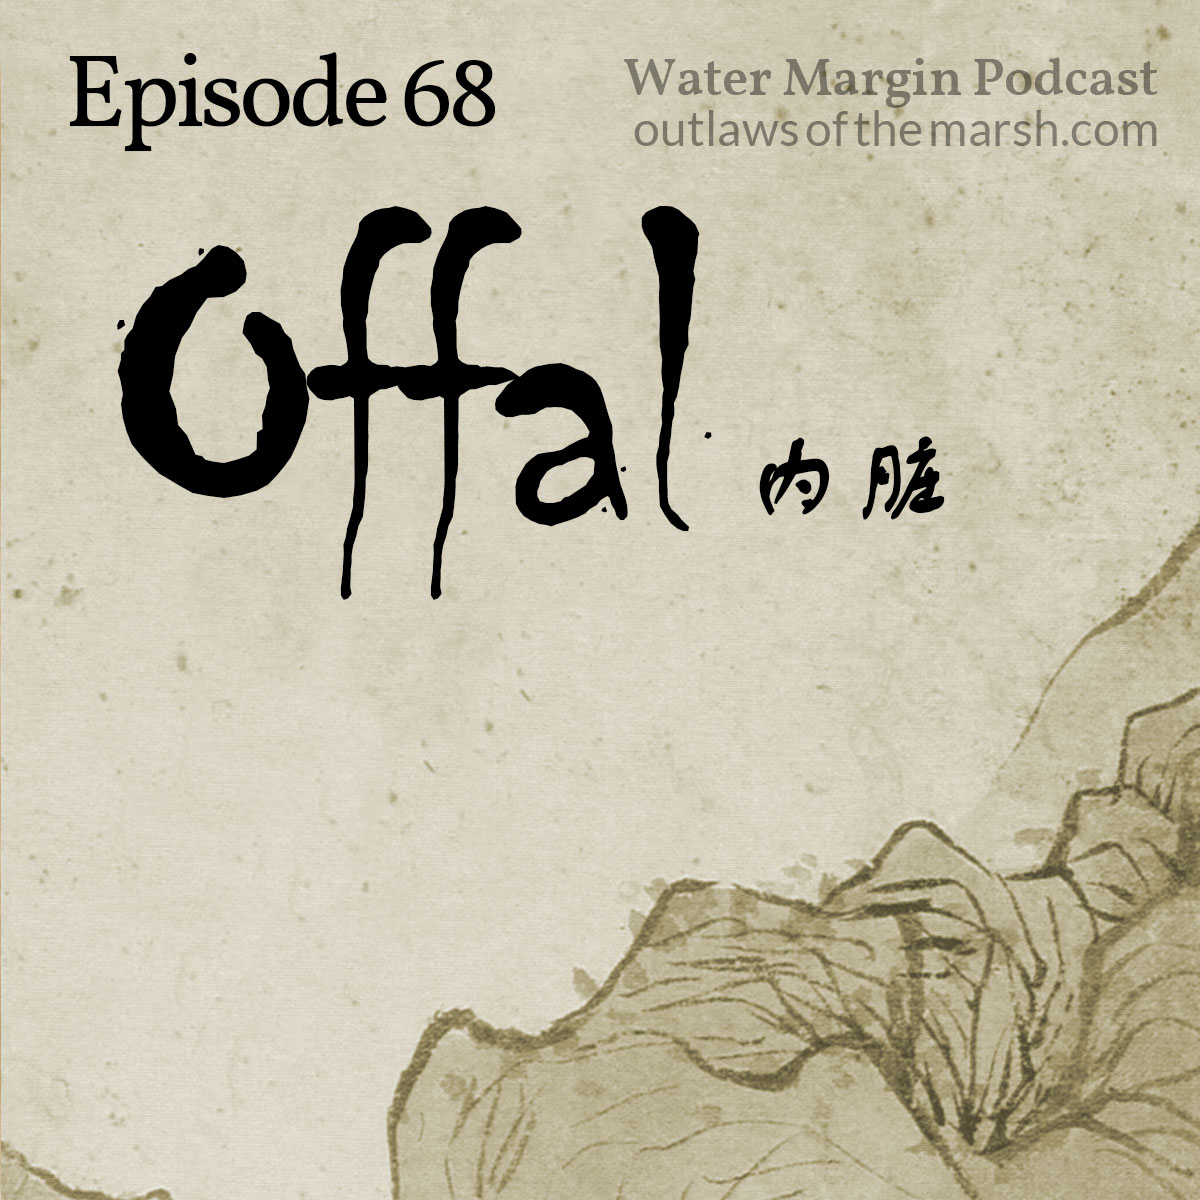 Water Margin Podcast: Episode 068